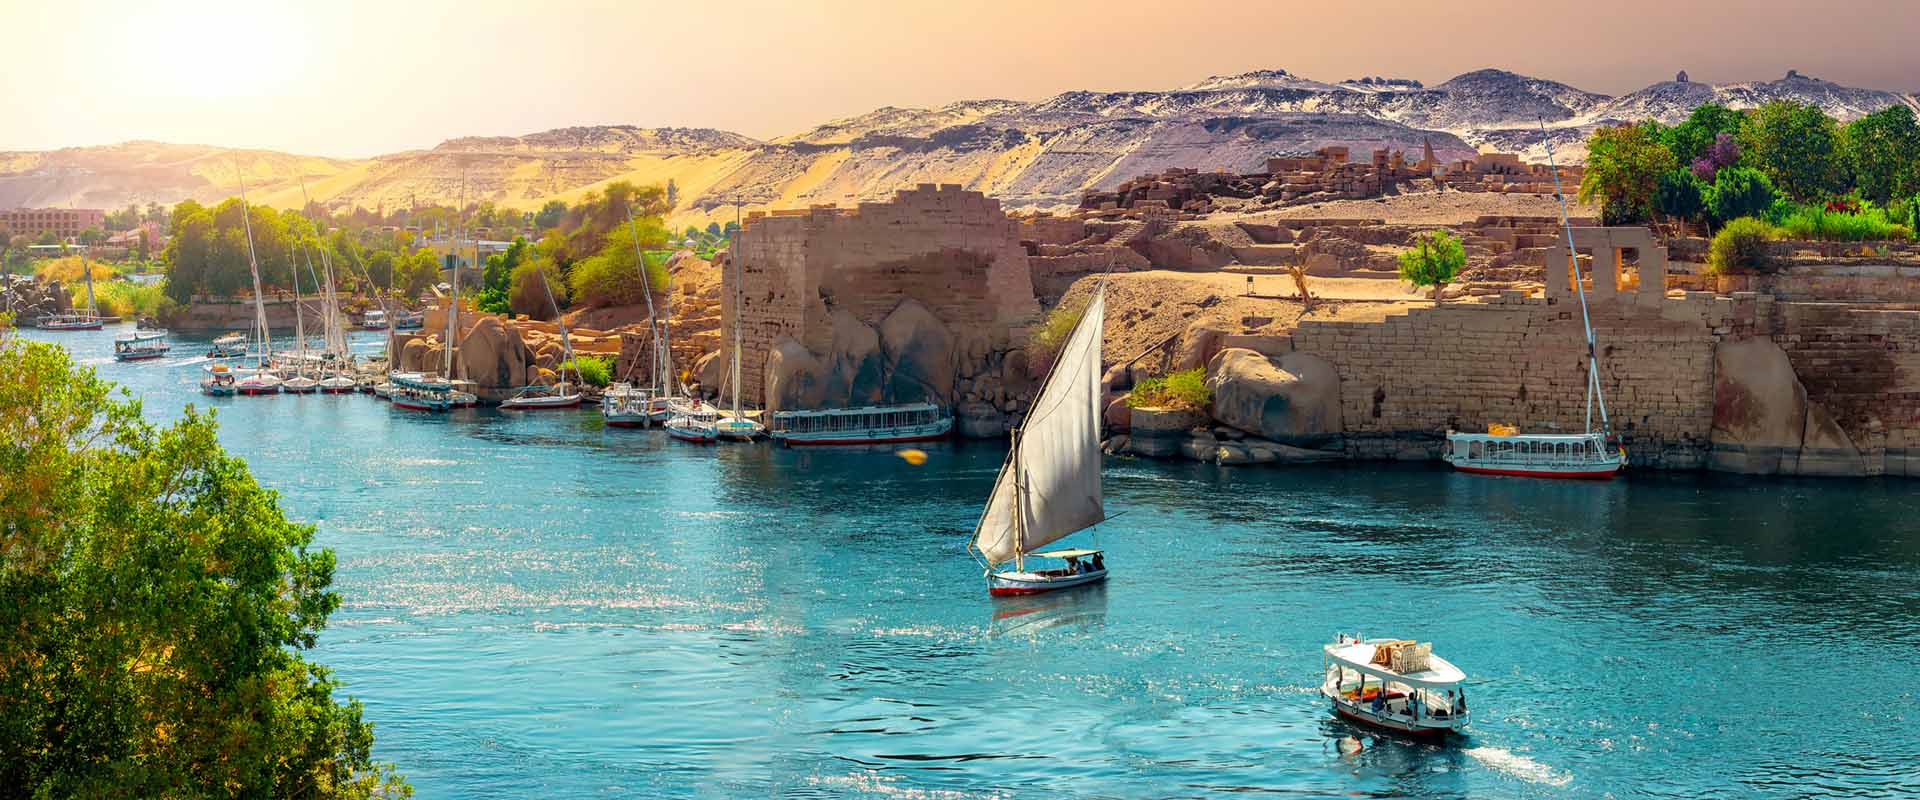 Nile River Small Ship Cruises